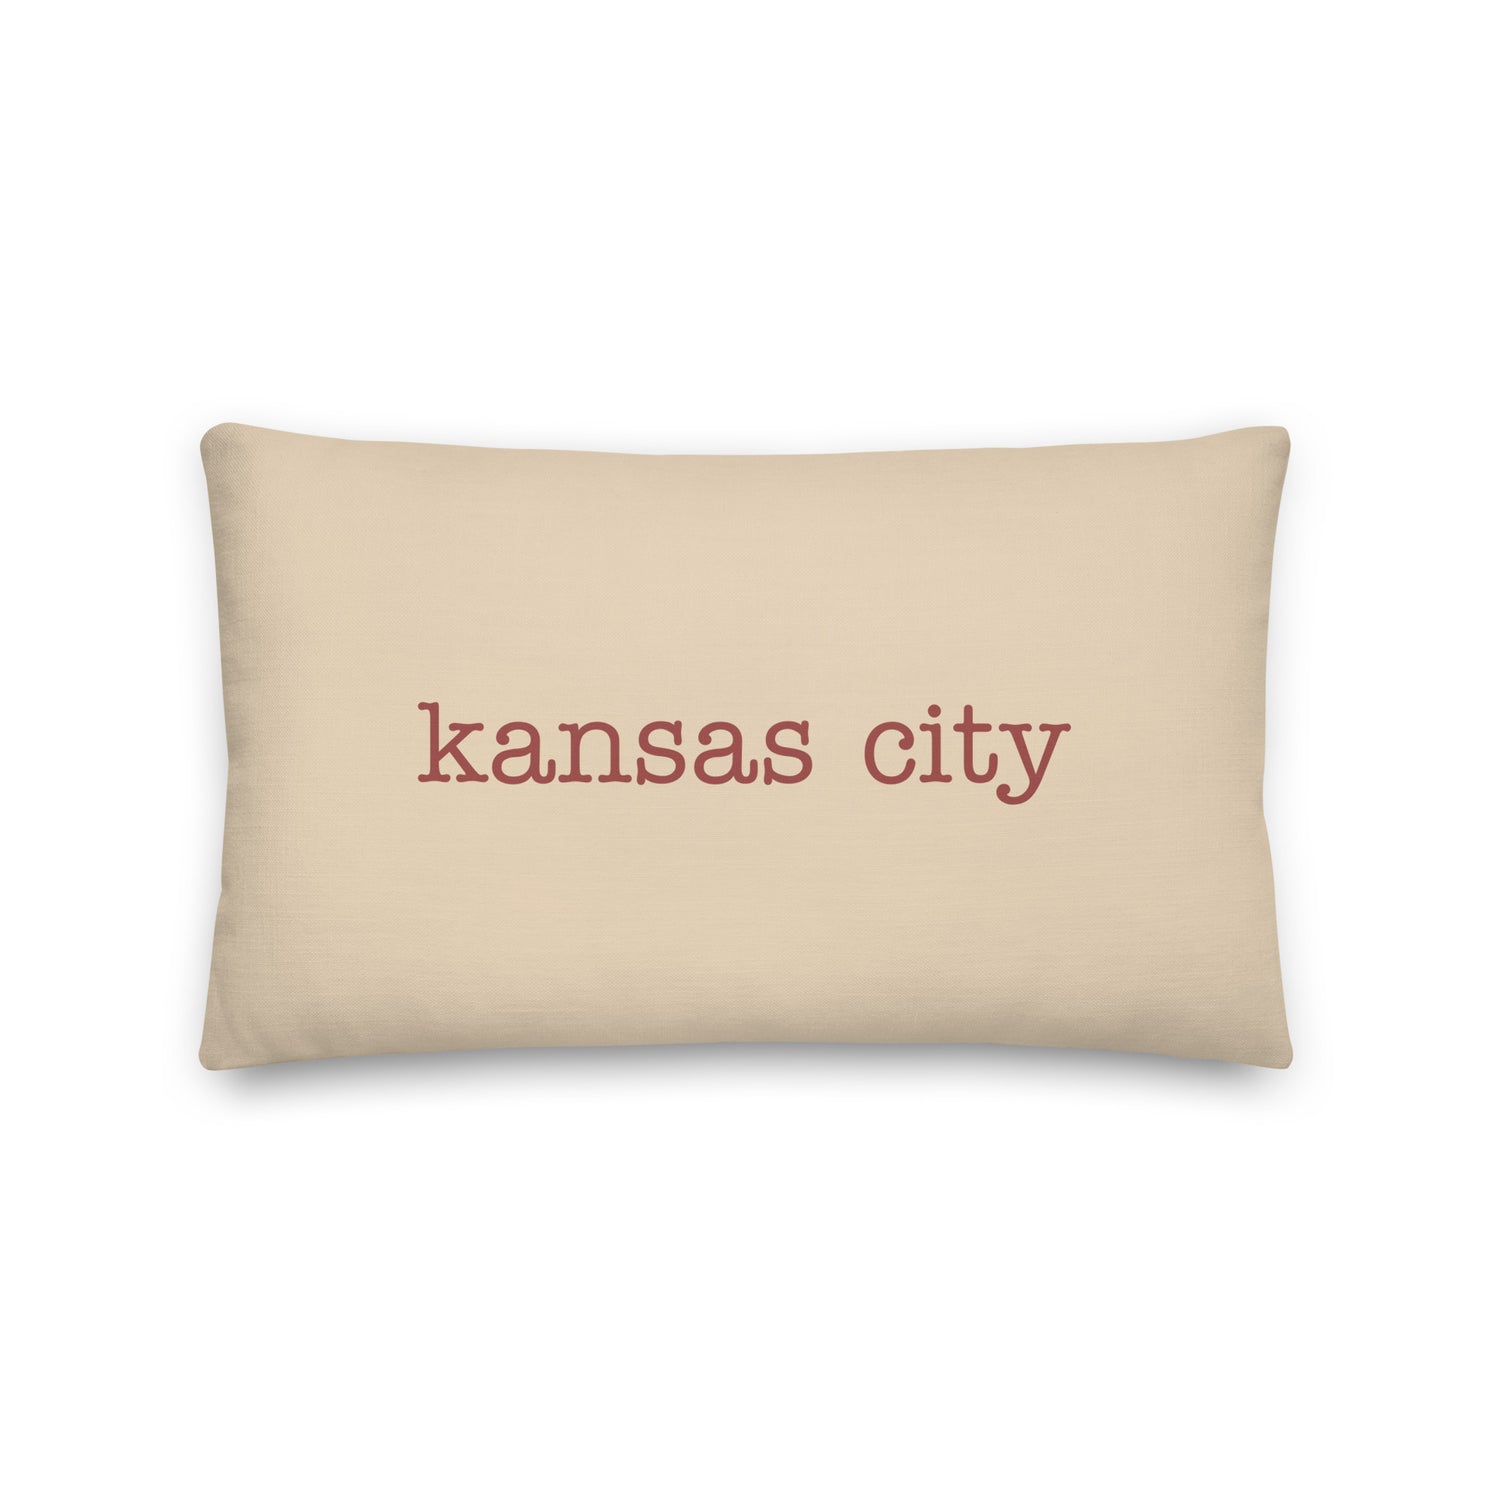 Kansas City Missouri Pillows and Blankets • MKC Airport Code